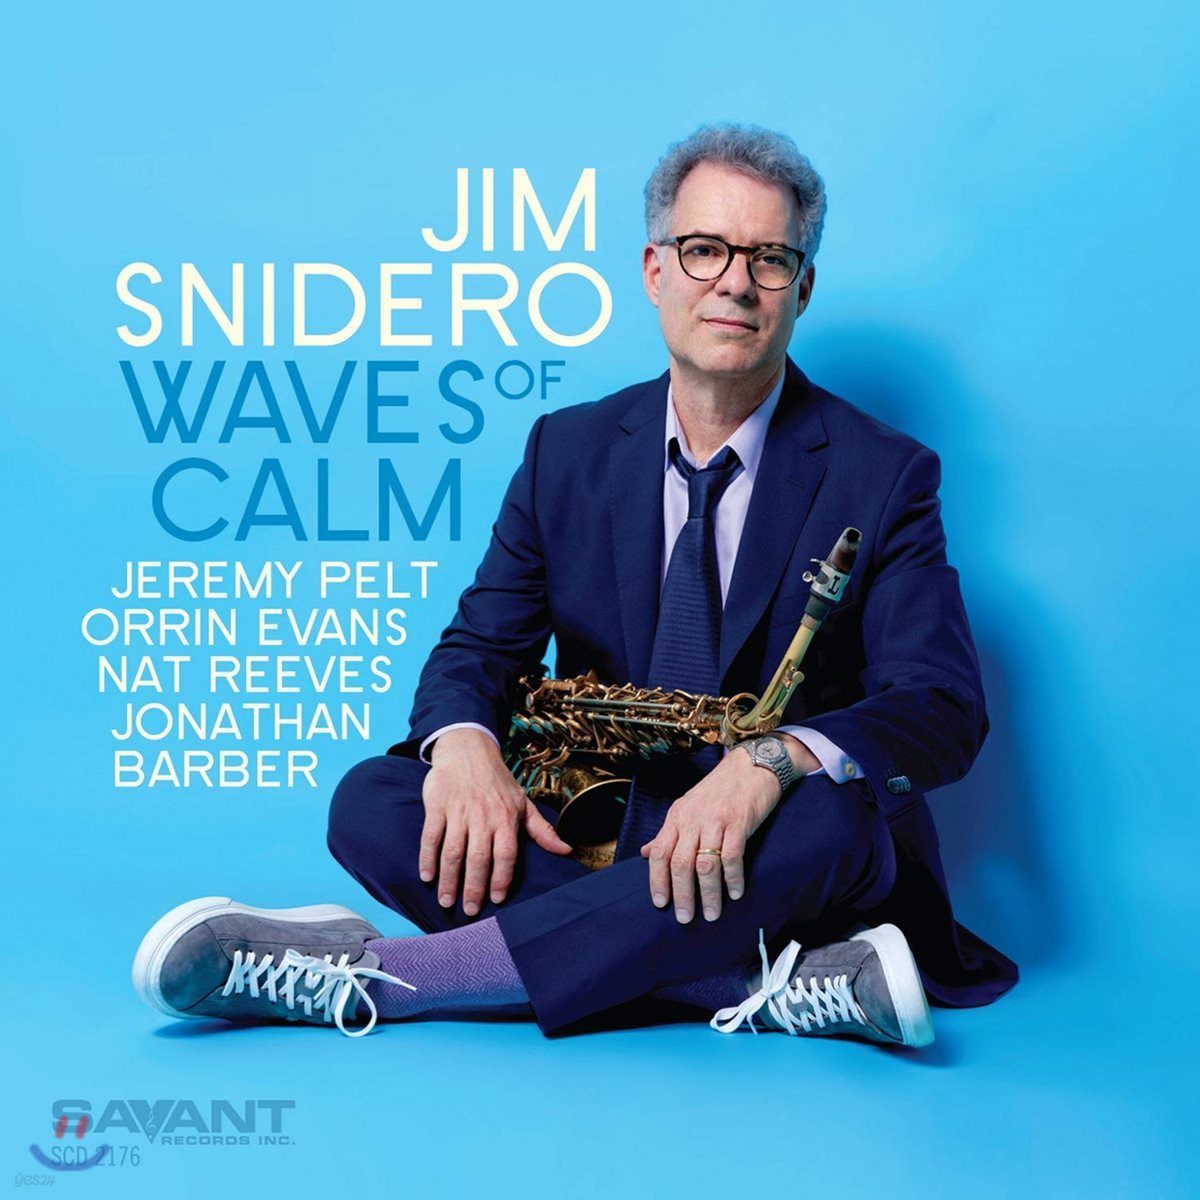 Jim Snidero (짐 스나이데로) - Waves of Calm 